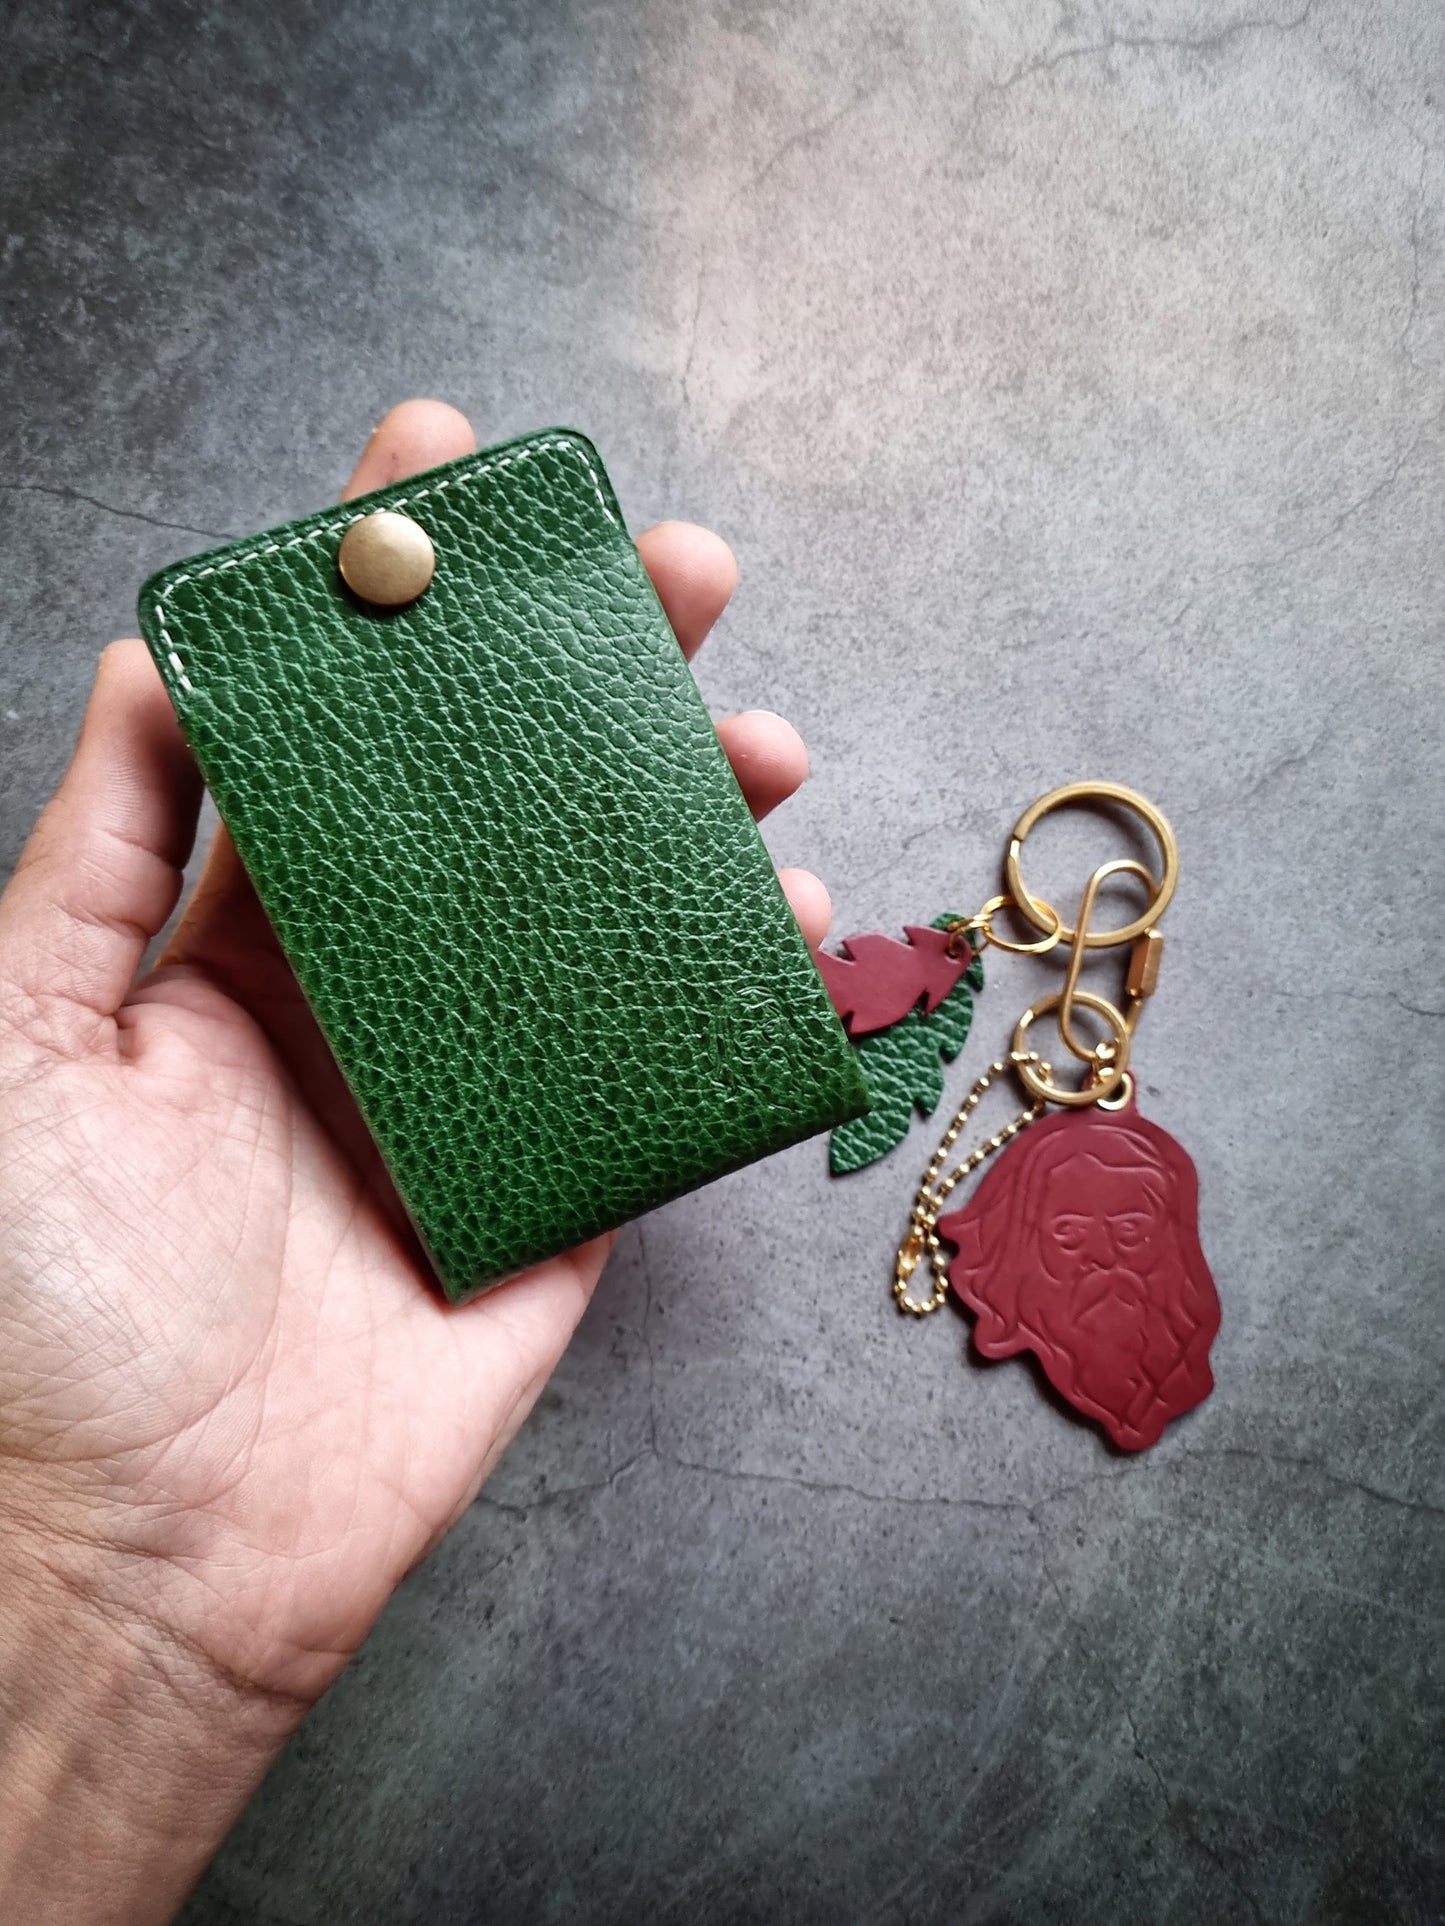 Snapper - minimalistic wallet - Autumn22